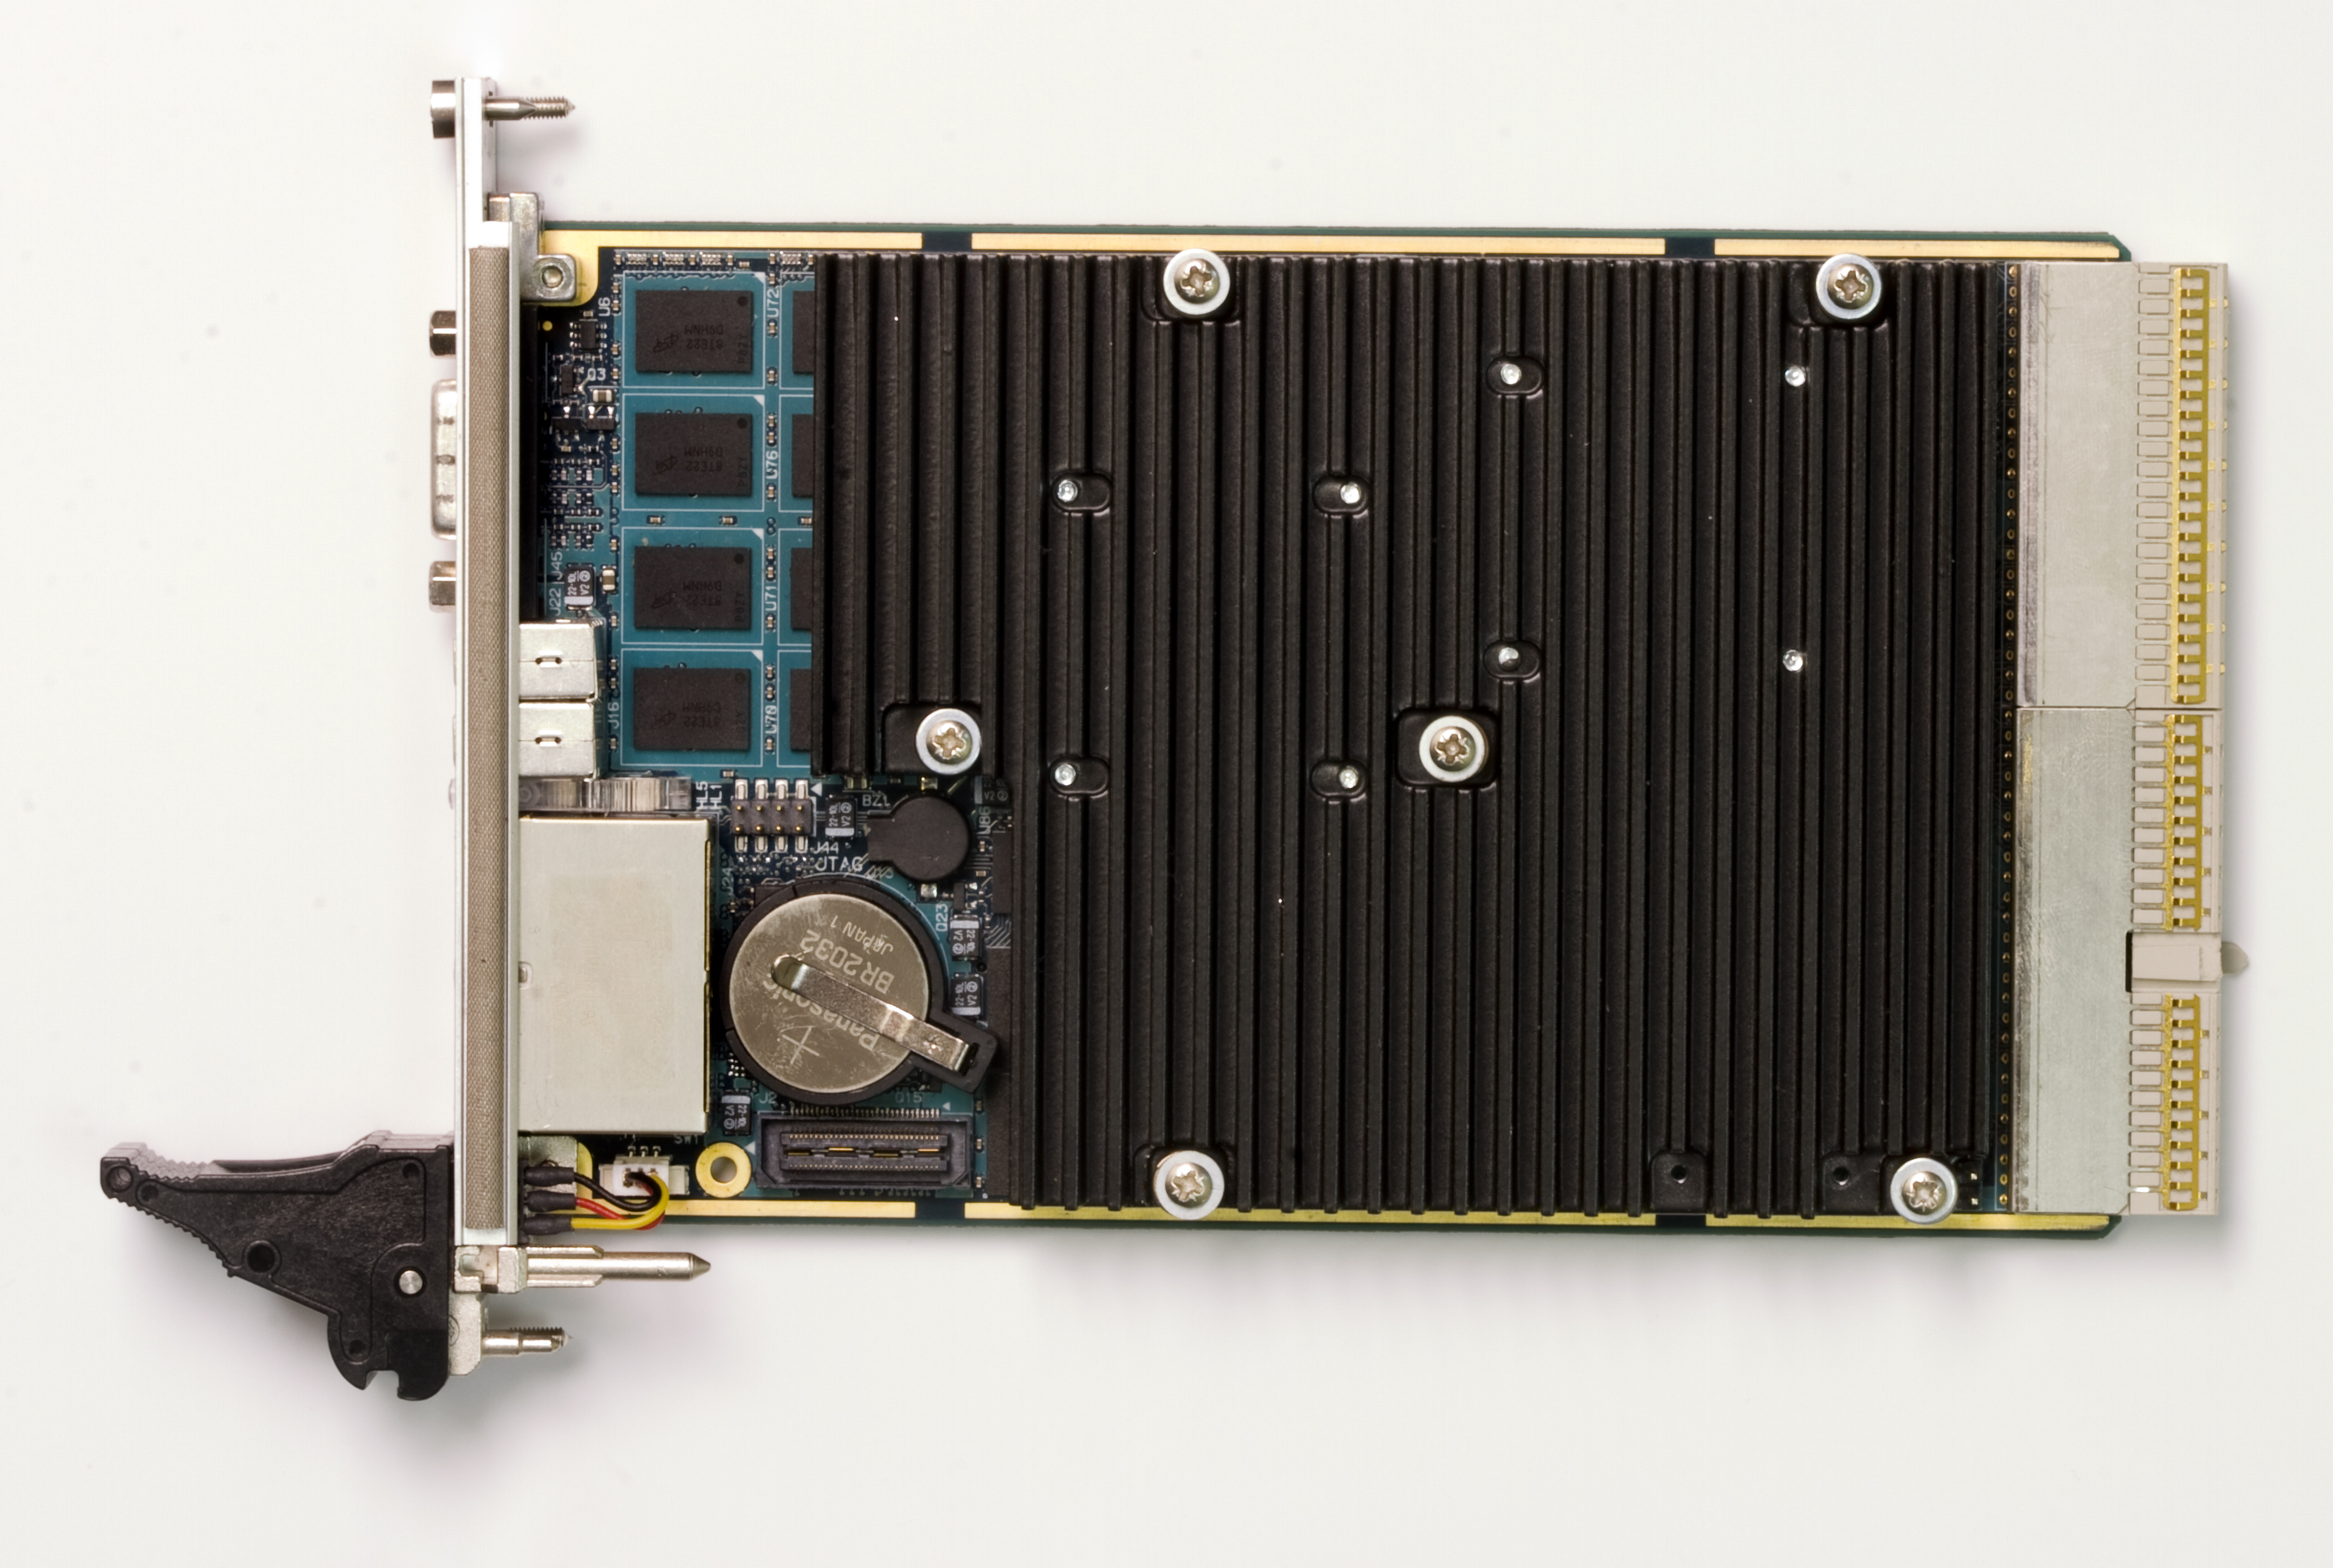 Процессорная плата CompactPCI 3U (PICMG2.0) на базе процессоров семейства Intel Core2Duo до 2.2 ГГц, 2хGigabit Ethernet и Serial ATA